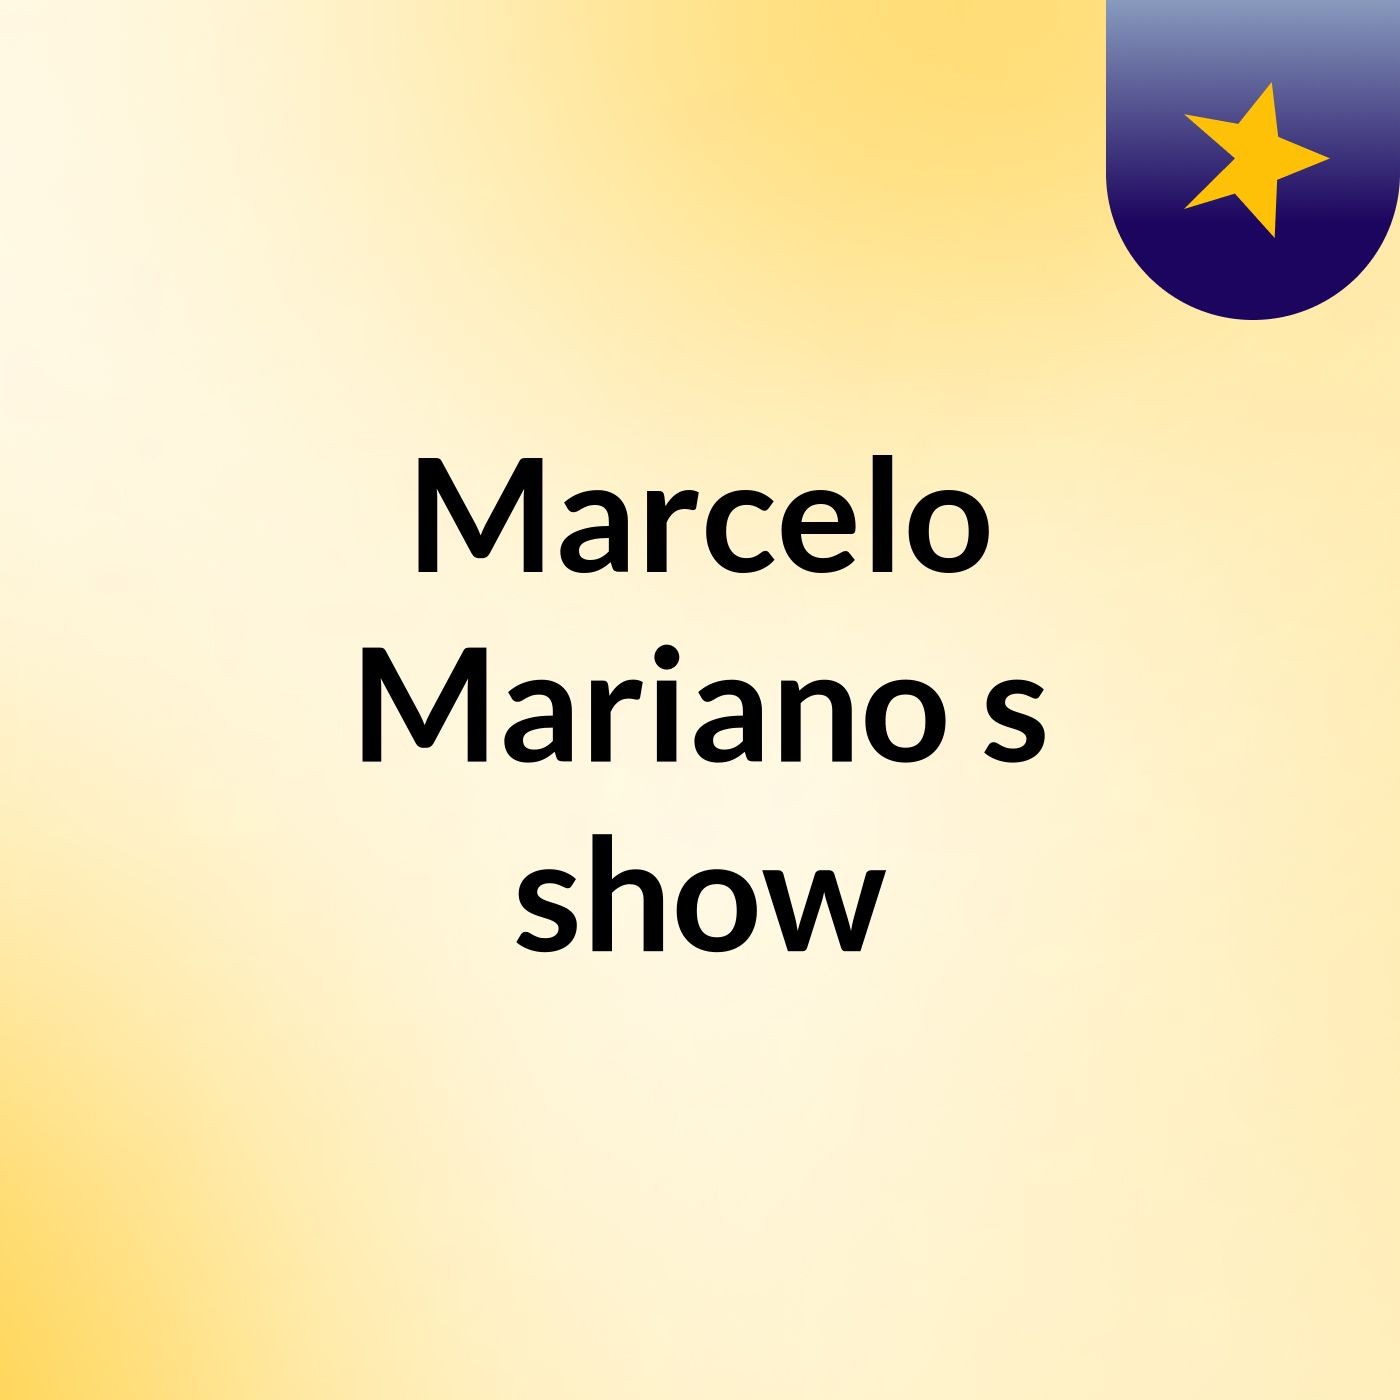 Marcelo Mariano's show